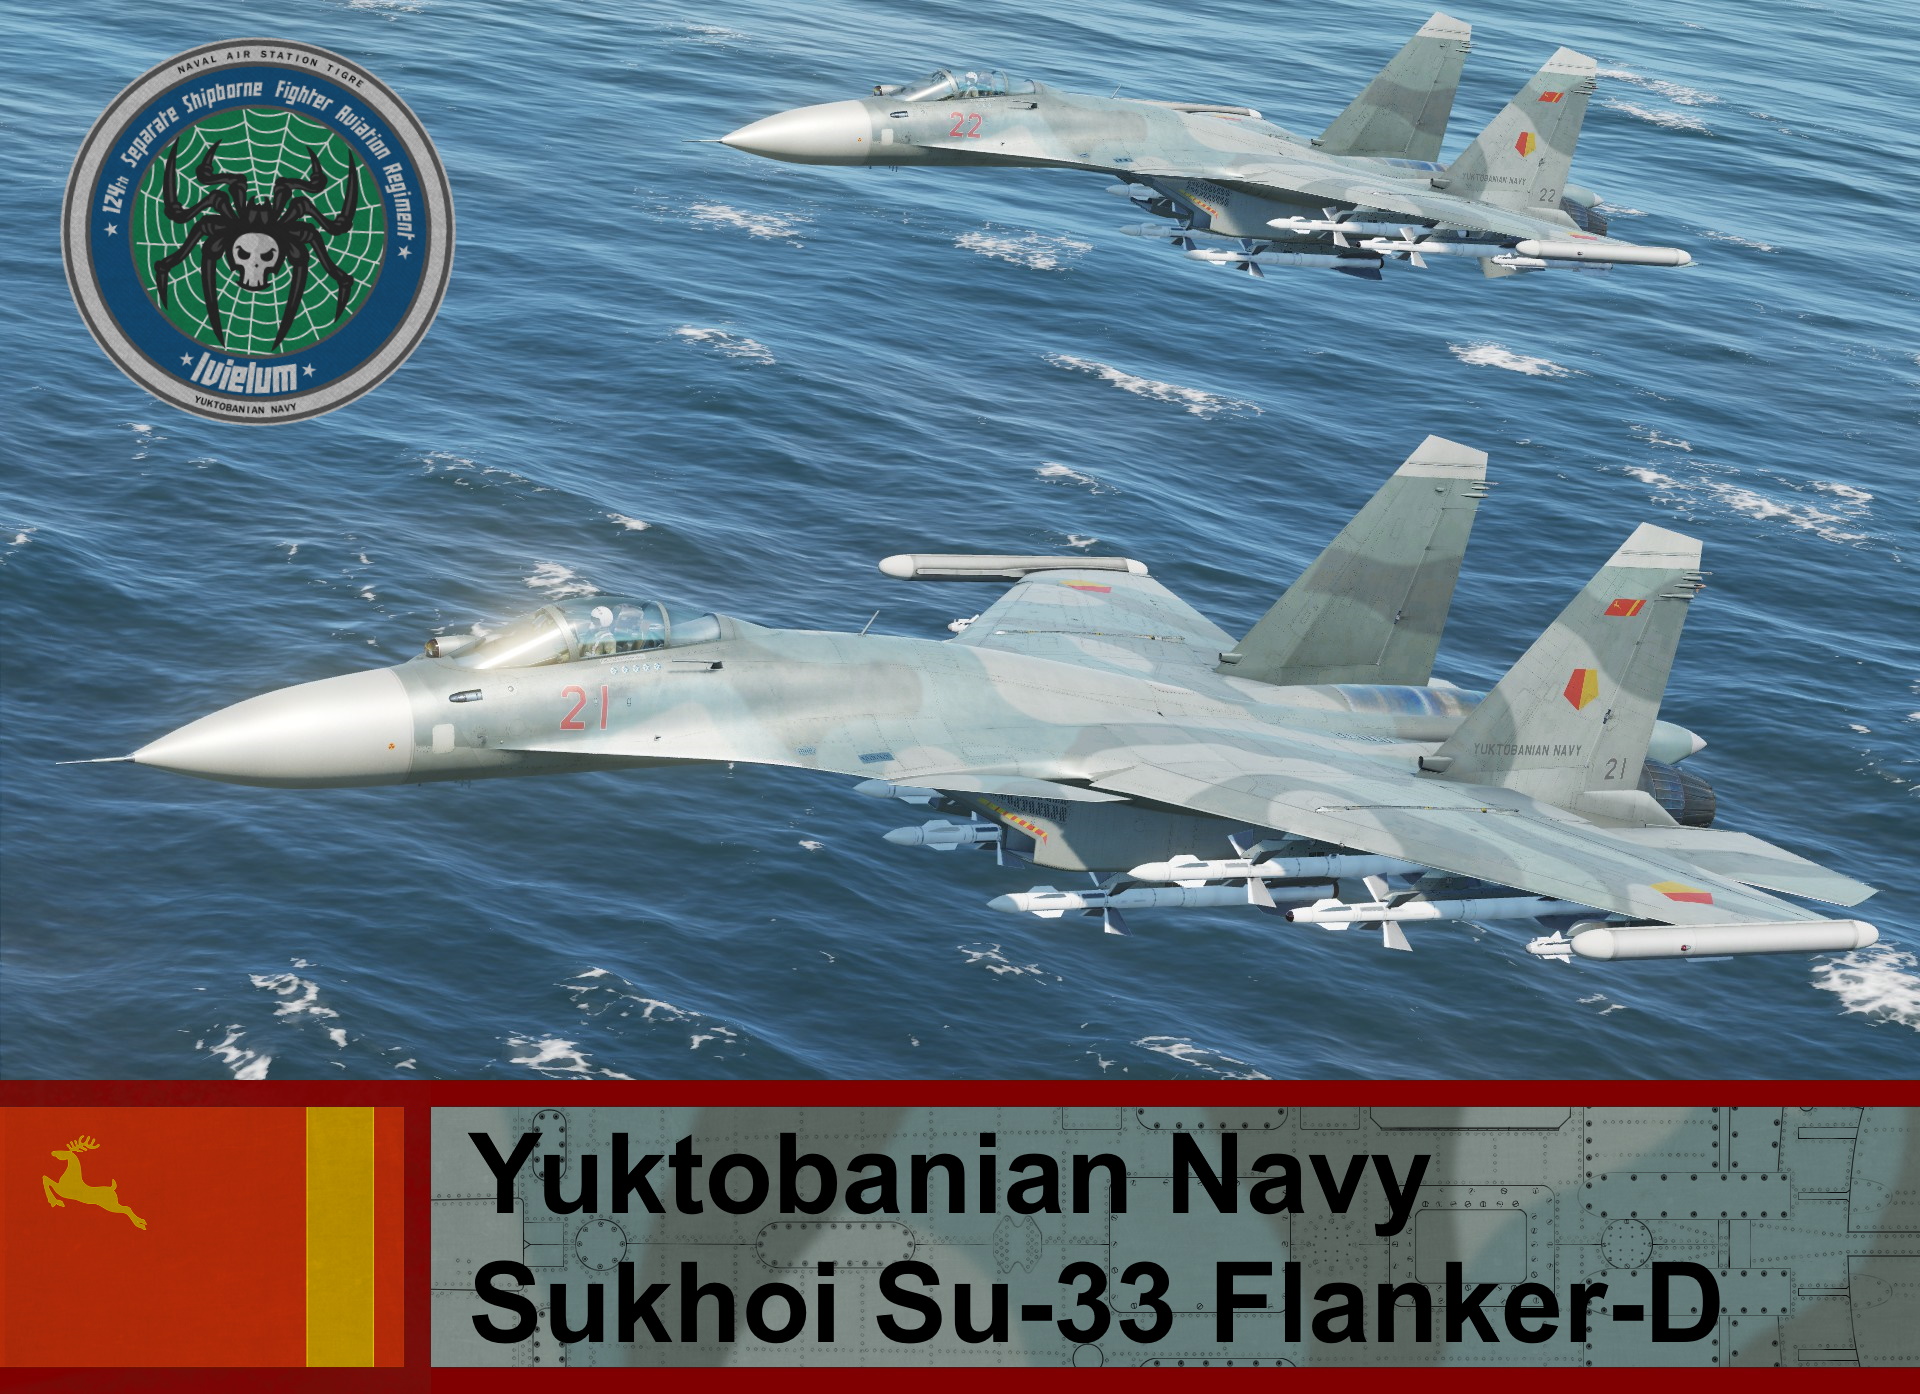 Yuktobanian Navy, Su-33 Flanker-D - Ace Combat 5 (124th SSFAR)